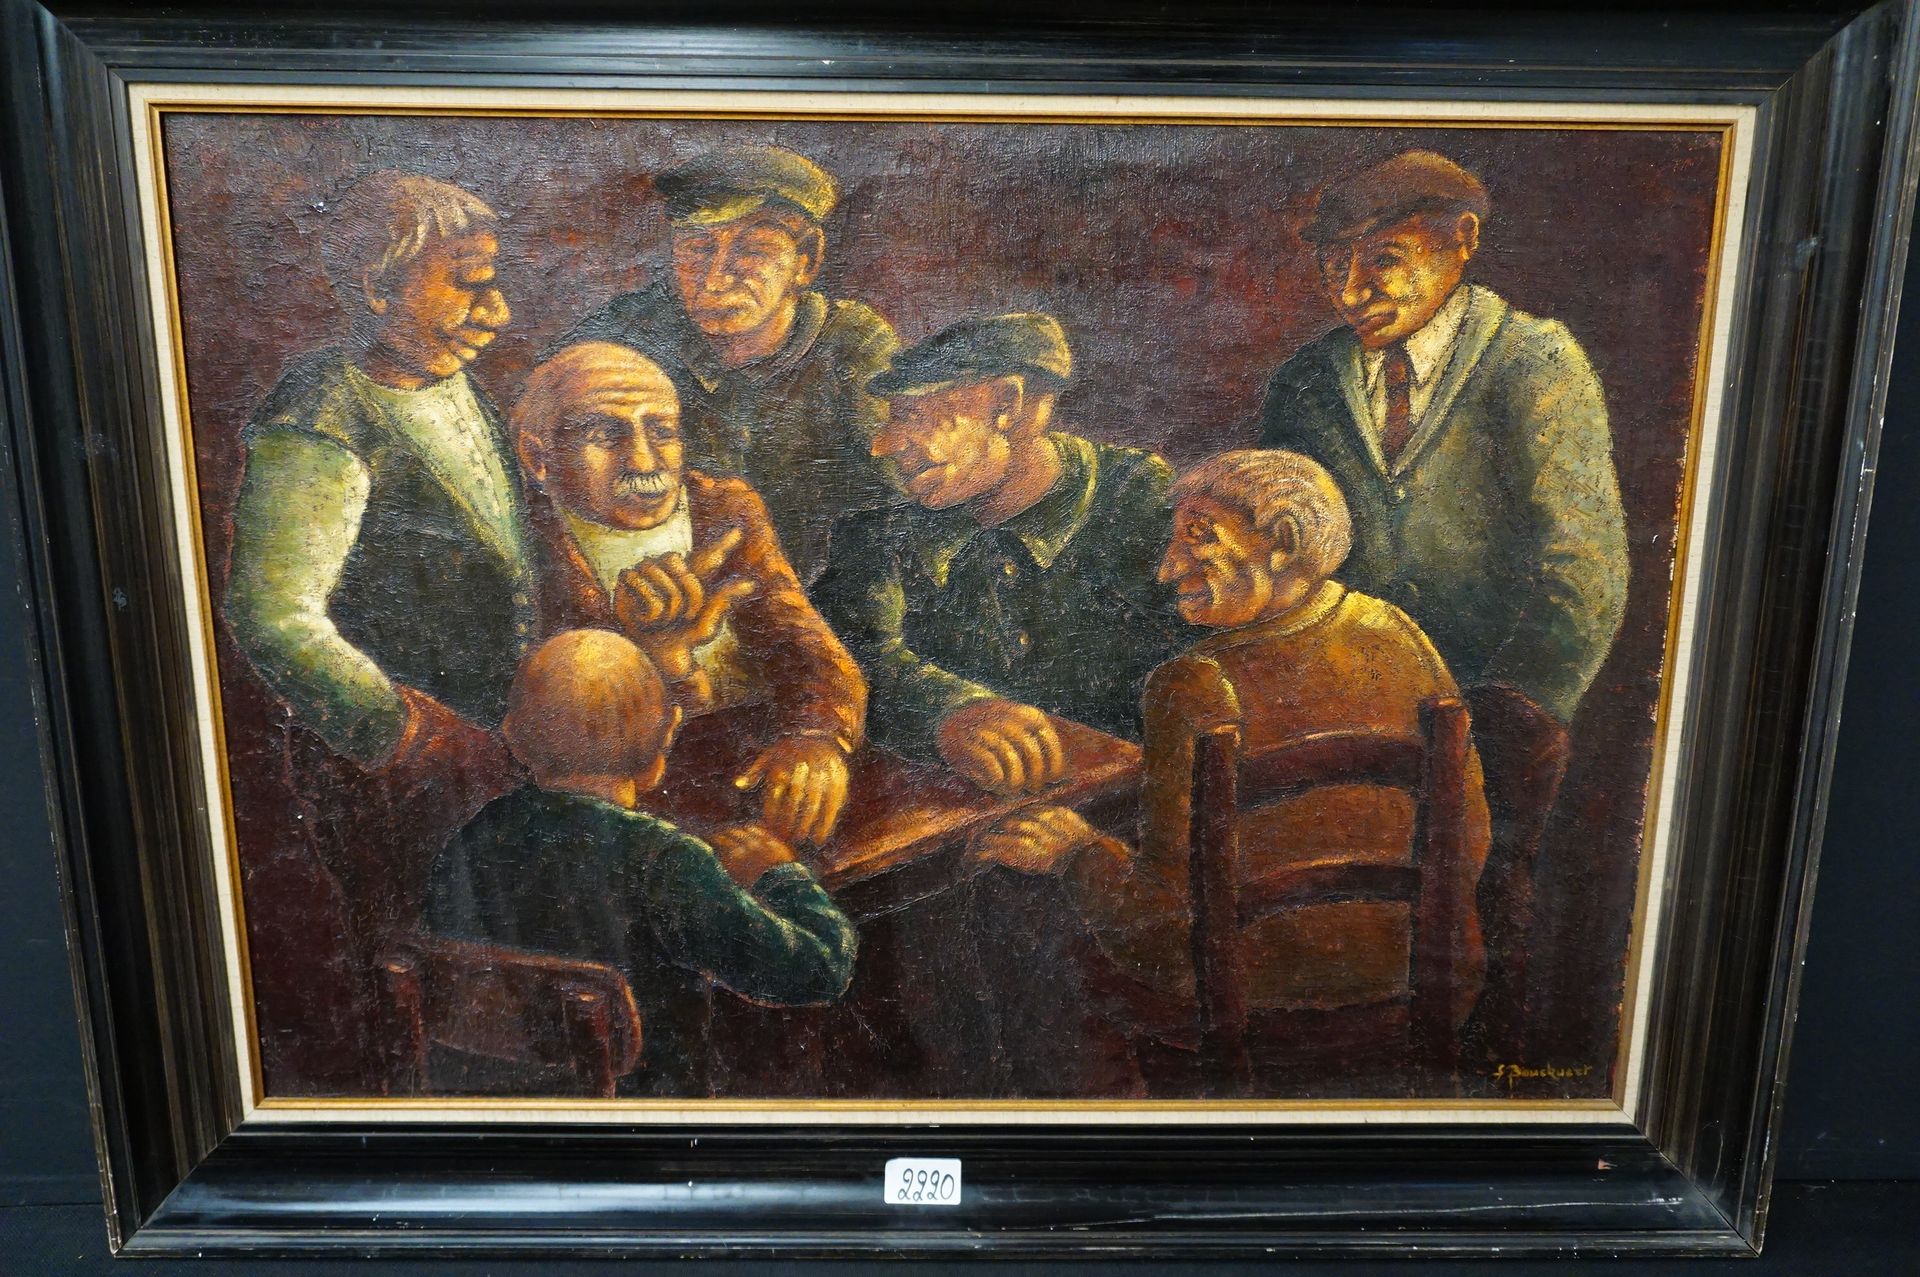 BOUCKAERT "Personajes en la posada" - Óleo sobre lienzo - Firmado - 117 x 80 cm